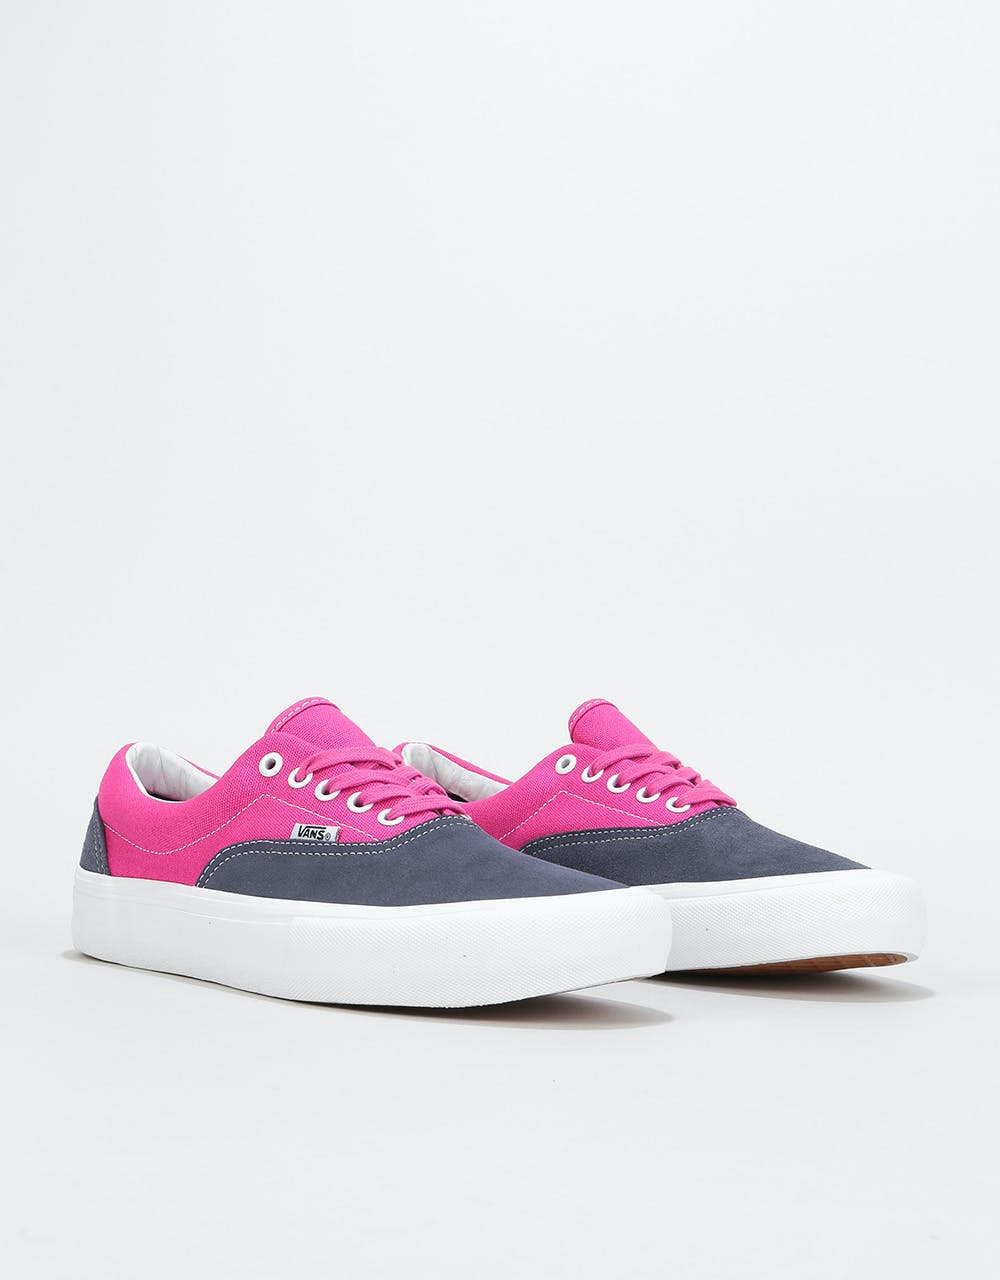 Vans Era Pro Skate Shoes - Navy/Fuchsia